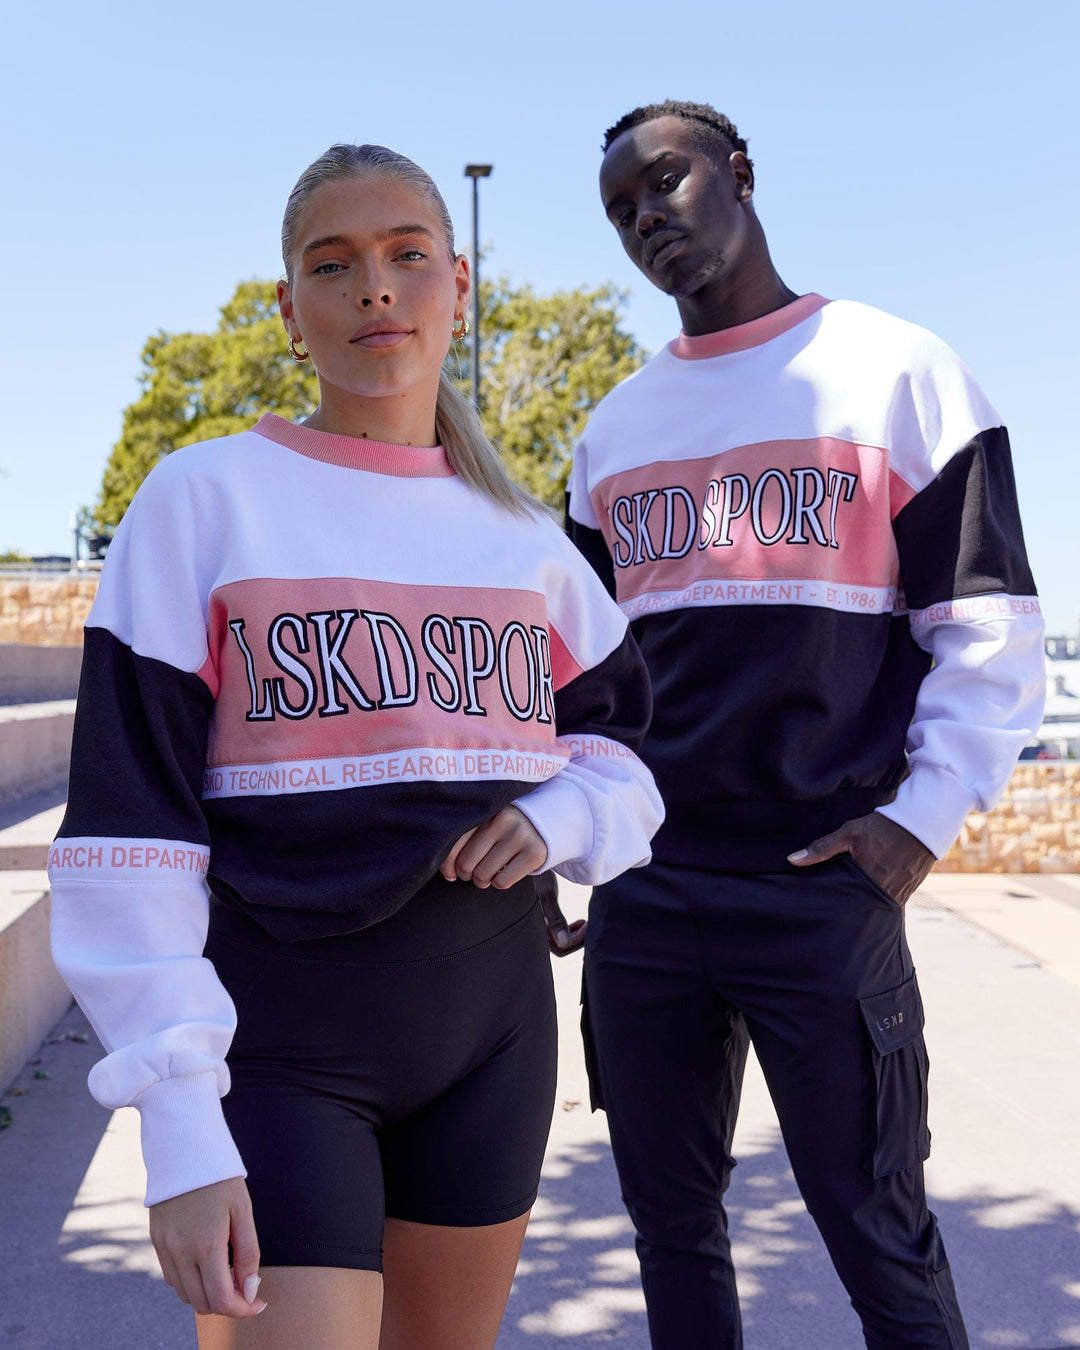 Duo wearing Unisex Sportif Sweater Oversize - Black-Peony Pink